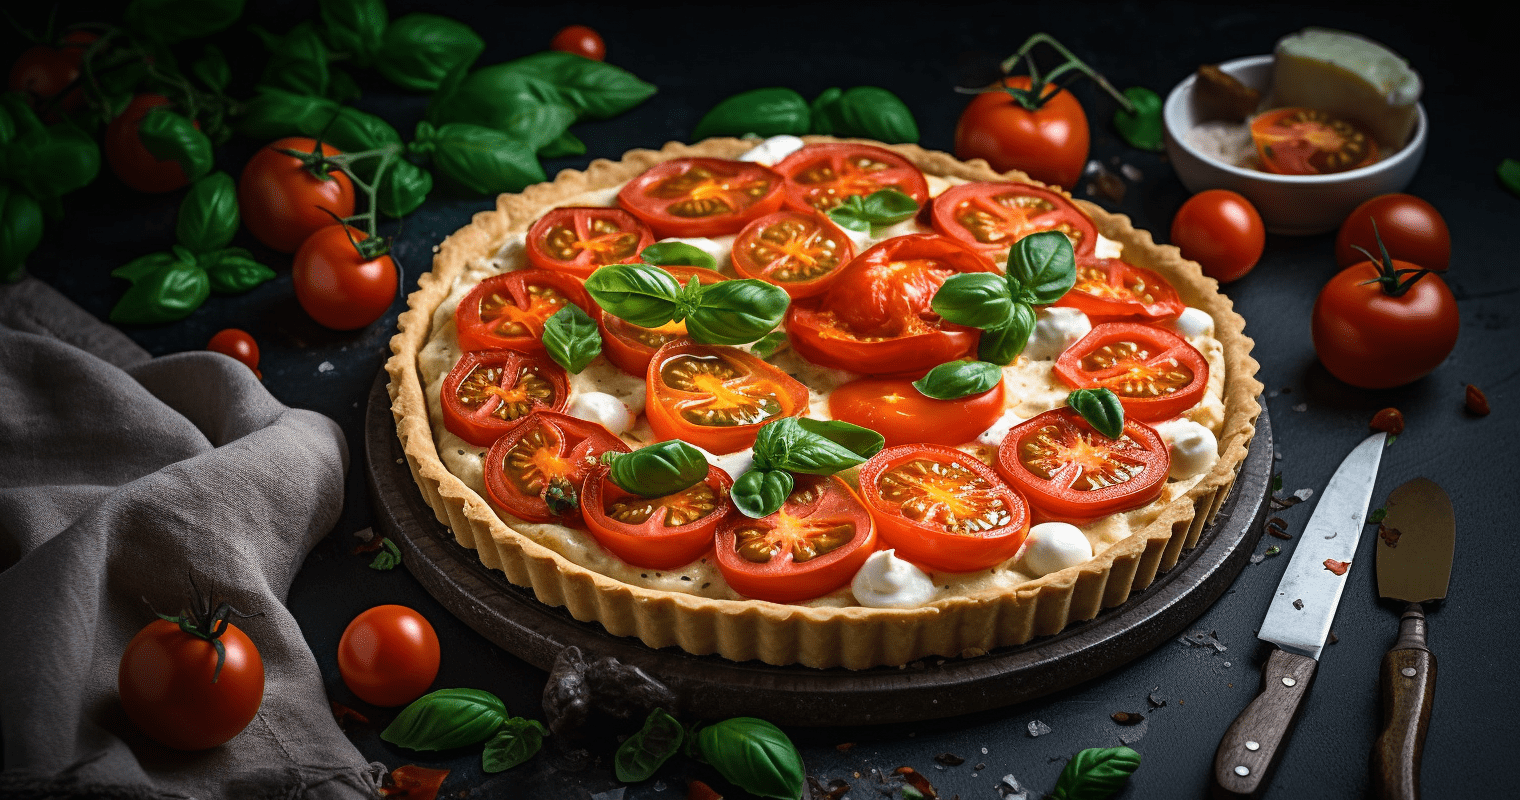 The Tomato and Mozzarella Tart: A Delicious Taste of Summer